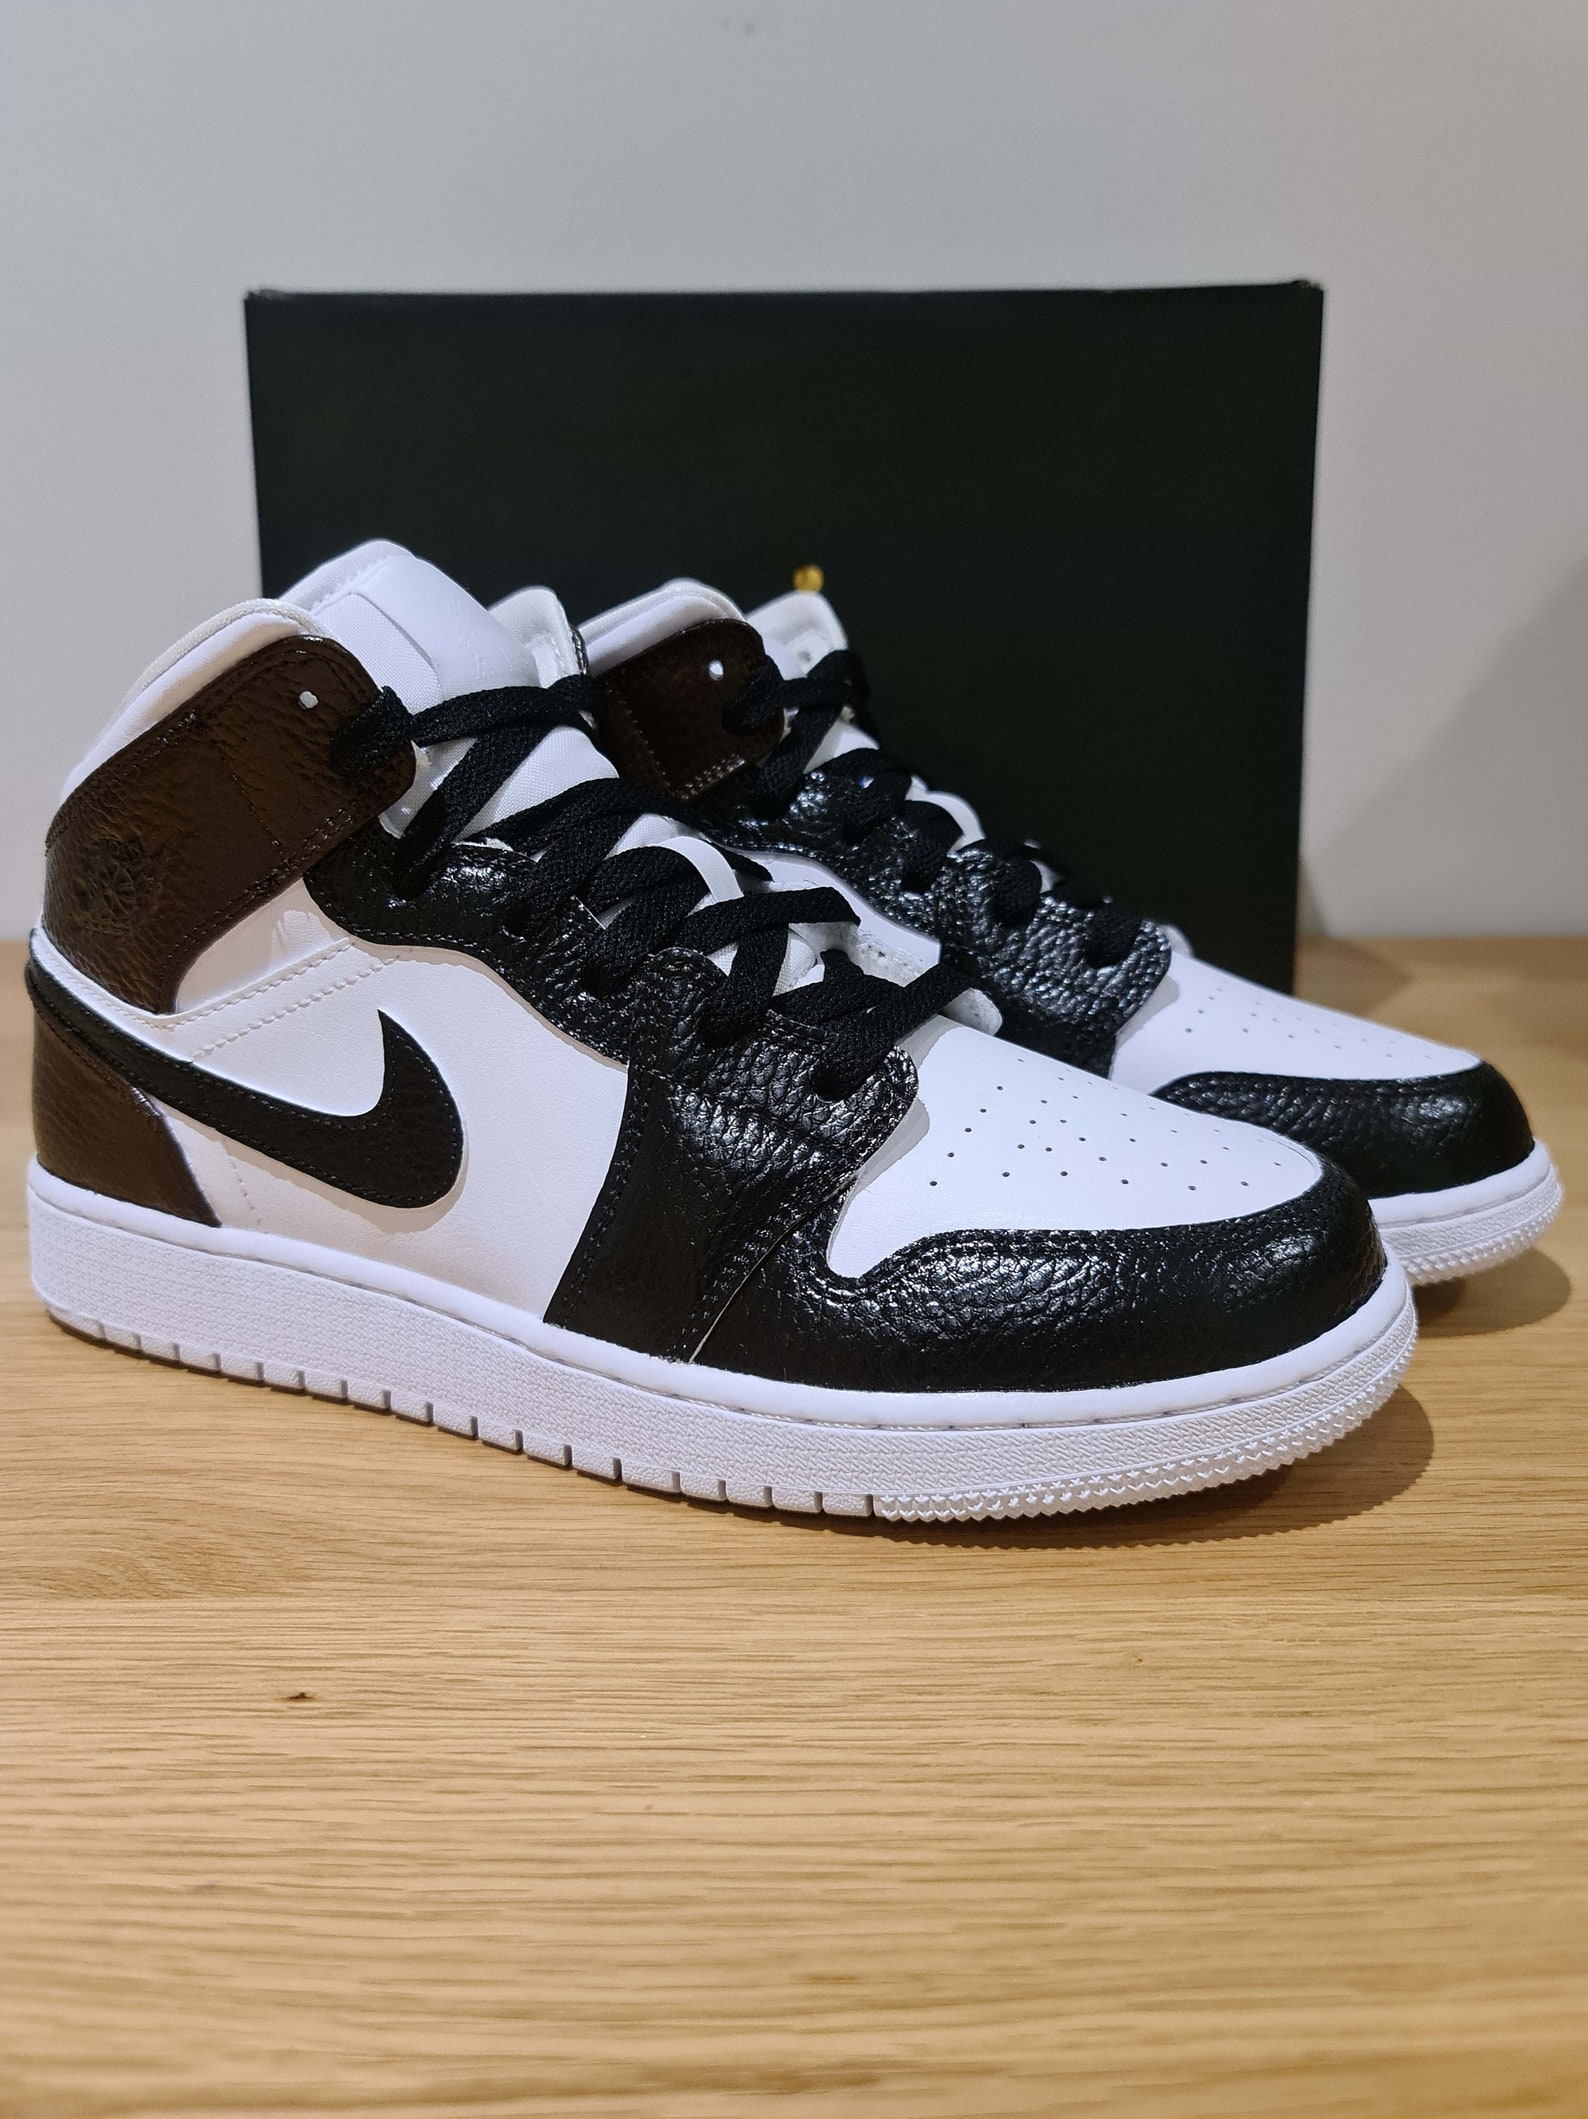 Custom Nike Jordan 1 Mid Brown and black Any colour | Etsy